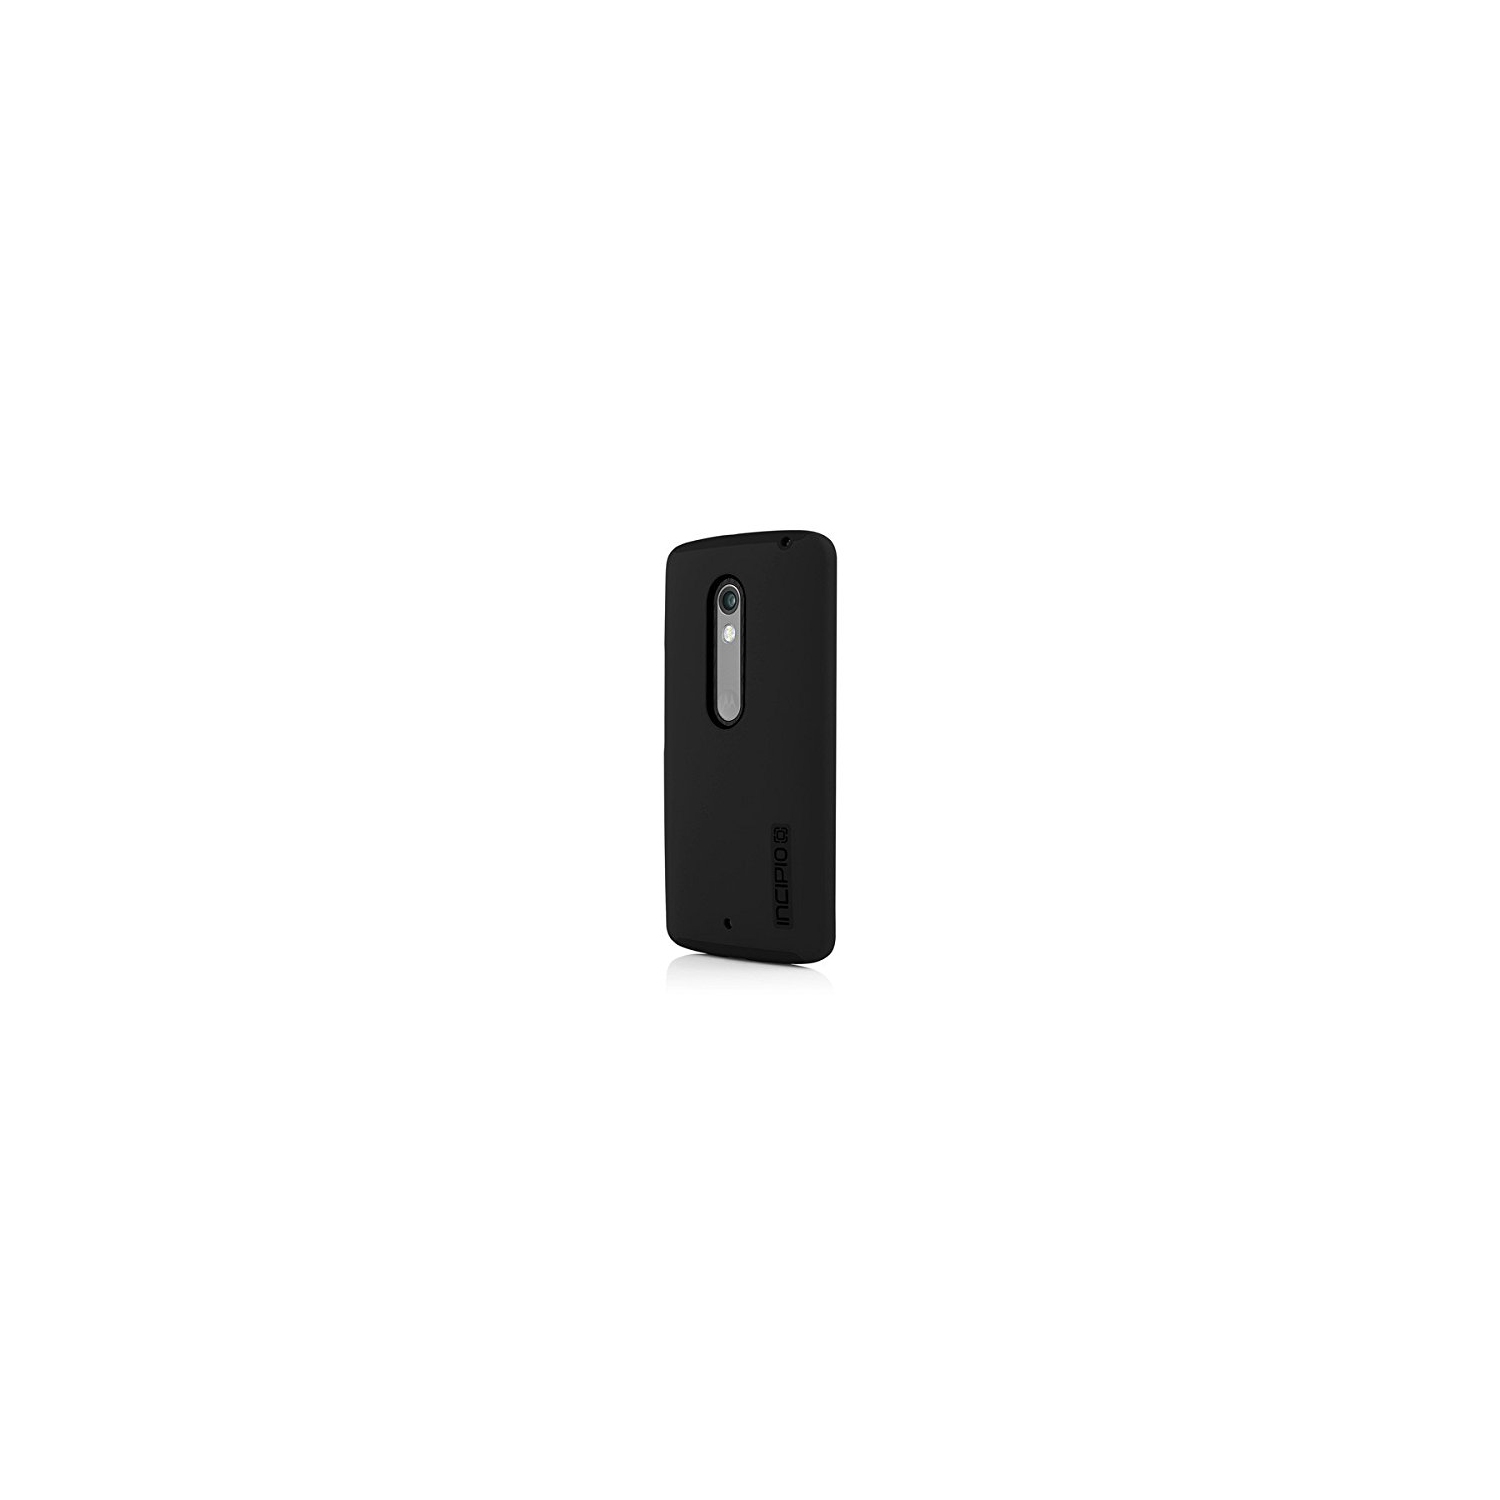 Incipio DualPro Carrying Case for Motorola Droid MAXX 2 Motorola Moto X Play, Retail Packaging, Black